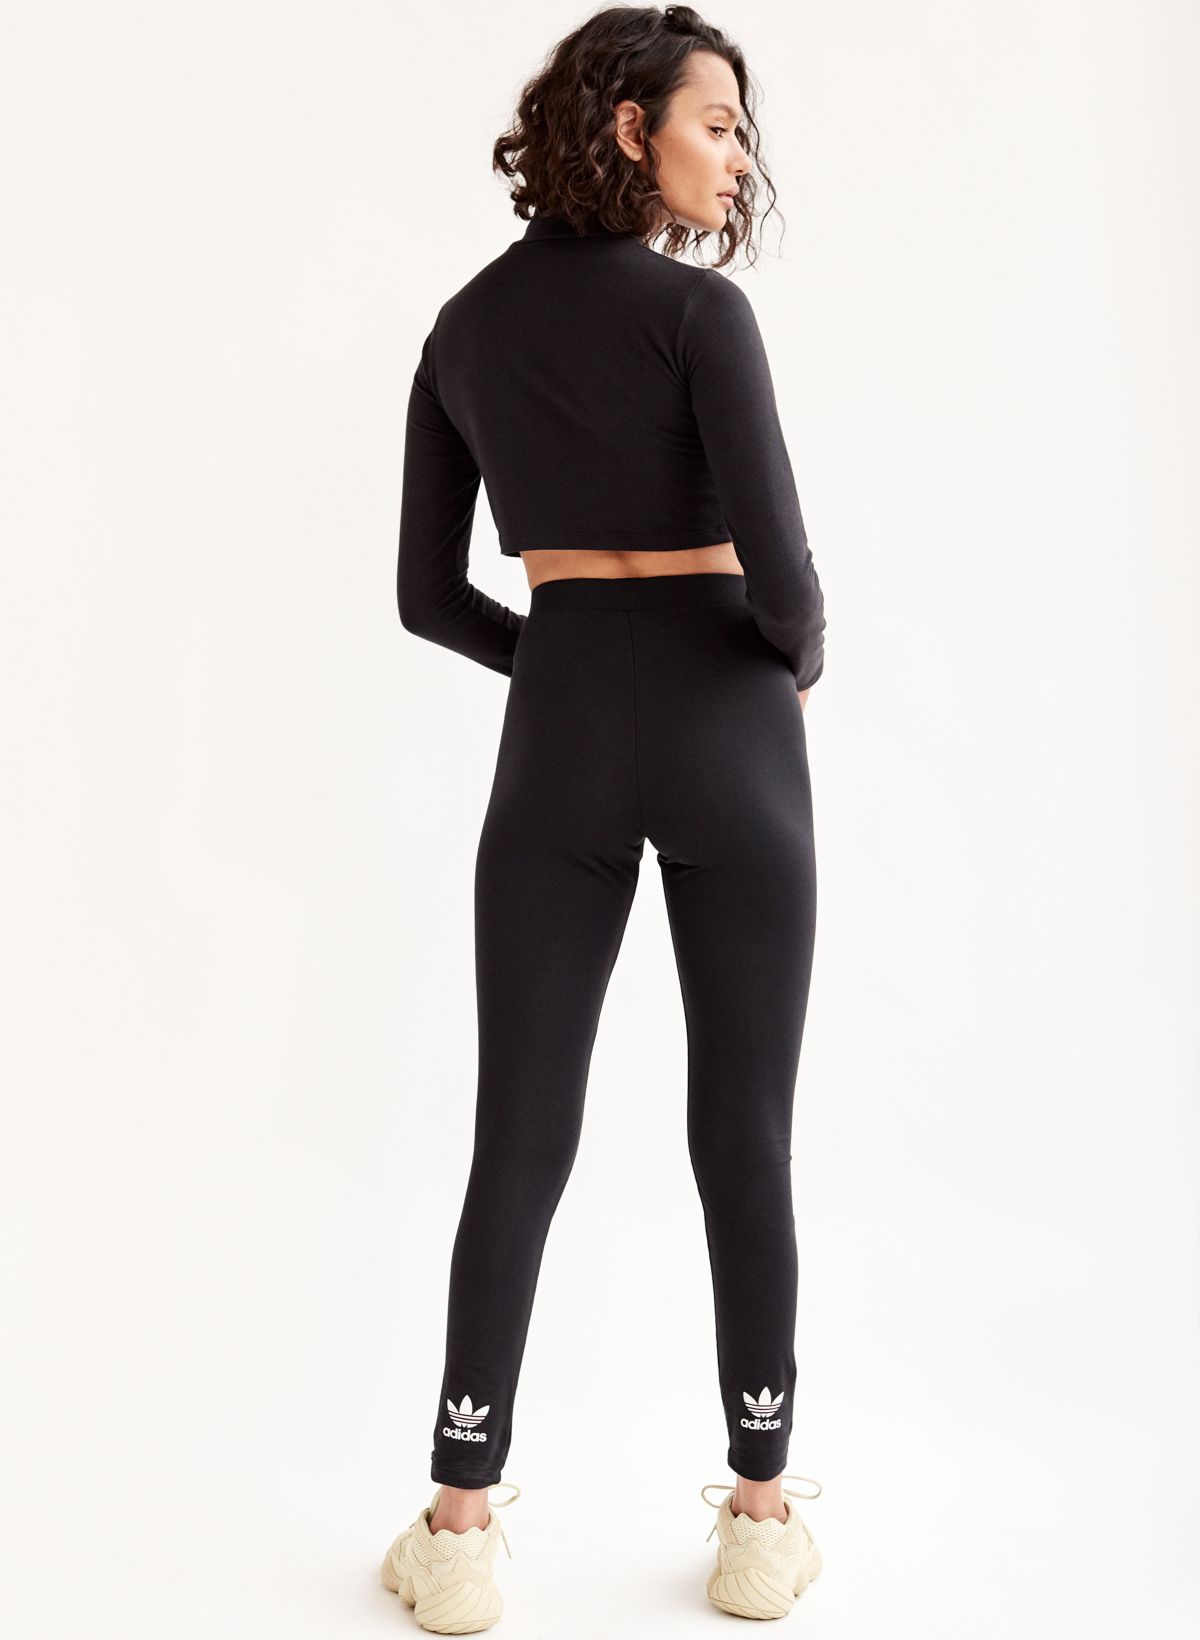 Adidas Women's Loungewear Trefoil Tight Pants - Black — Just For Sports